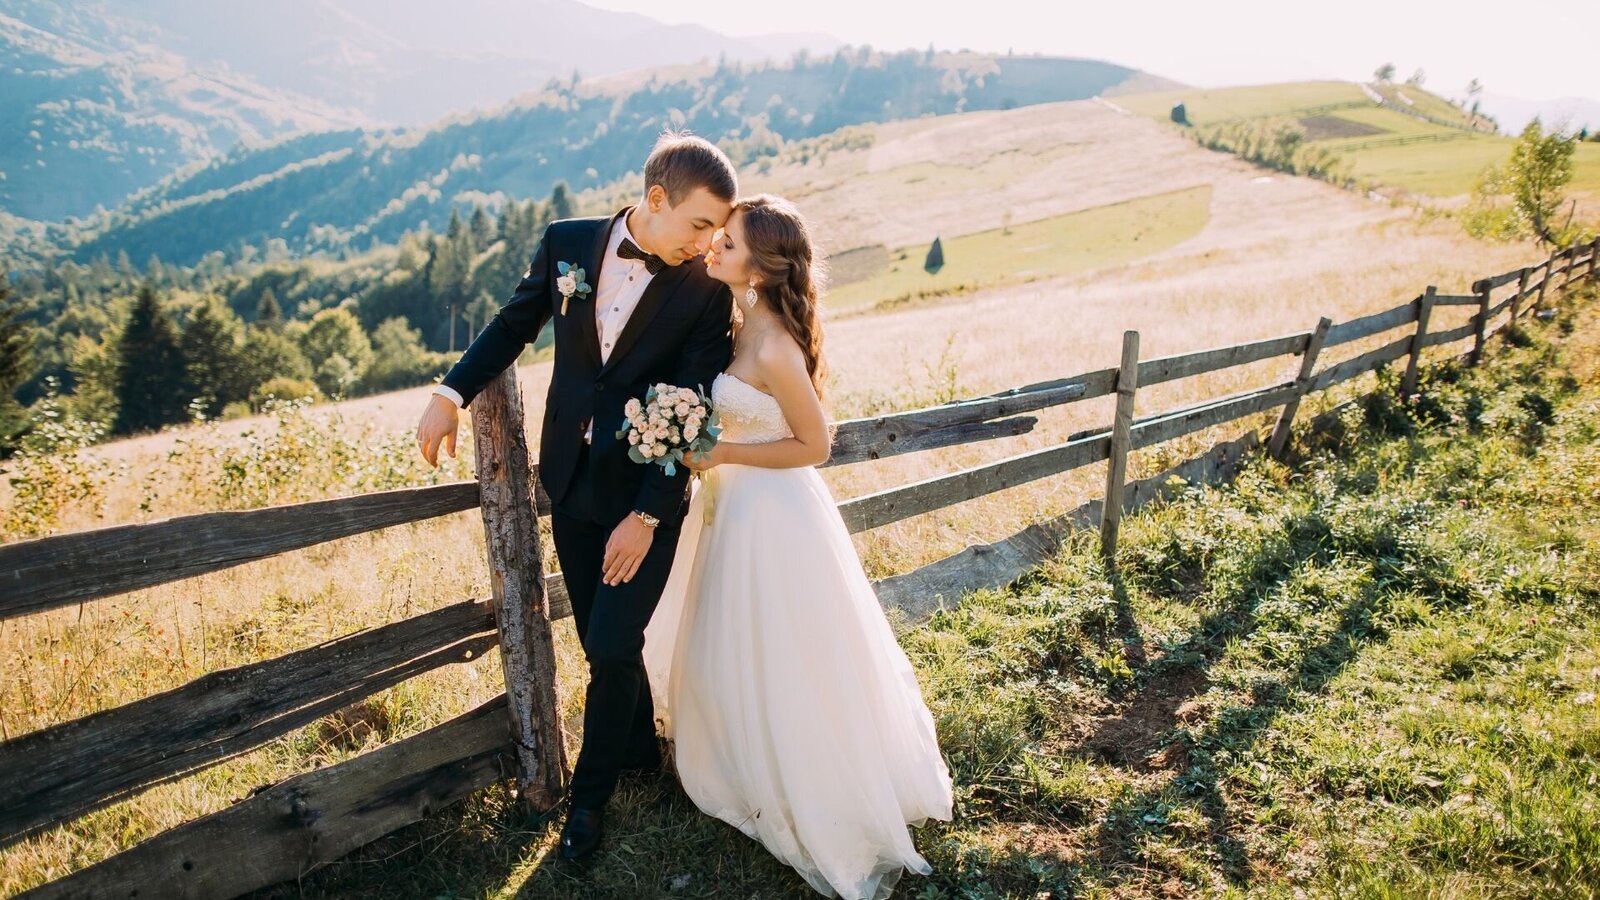 JennaDowell|Financial Coach|Floral Design|Yellowstone Wedding|Elopement.Couple